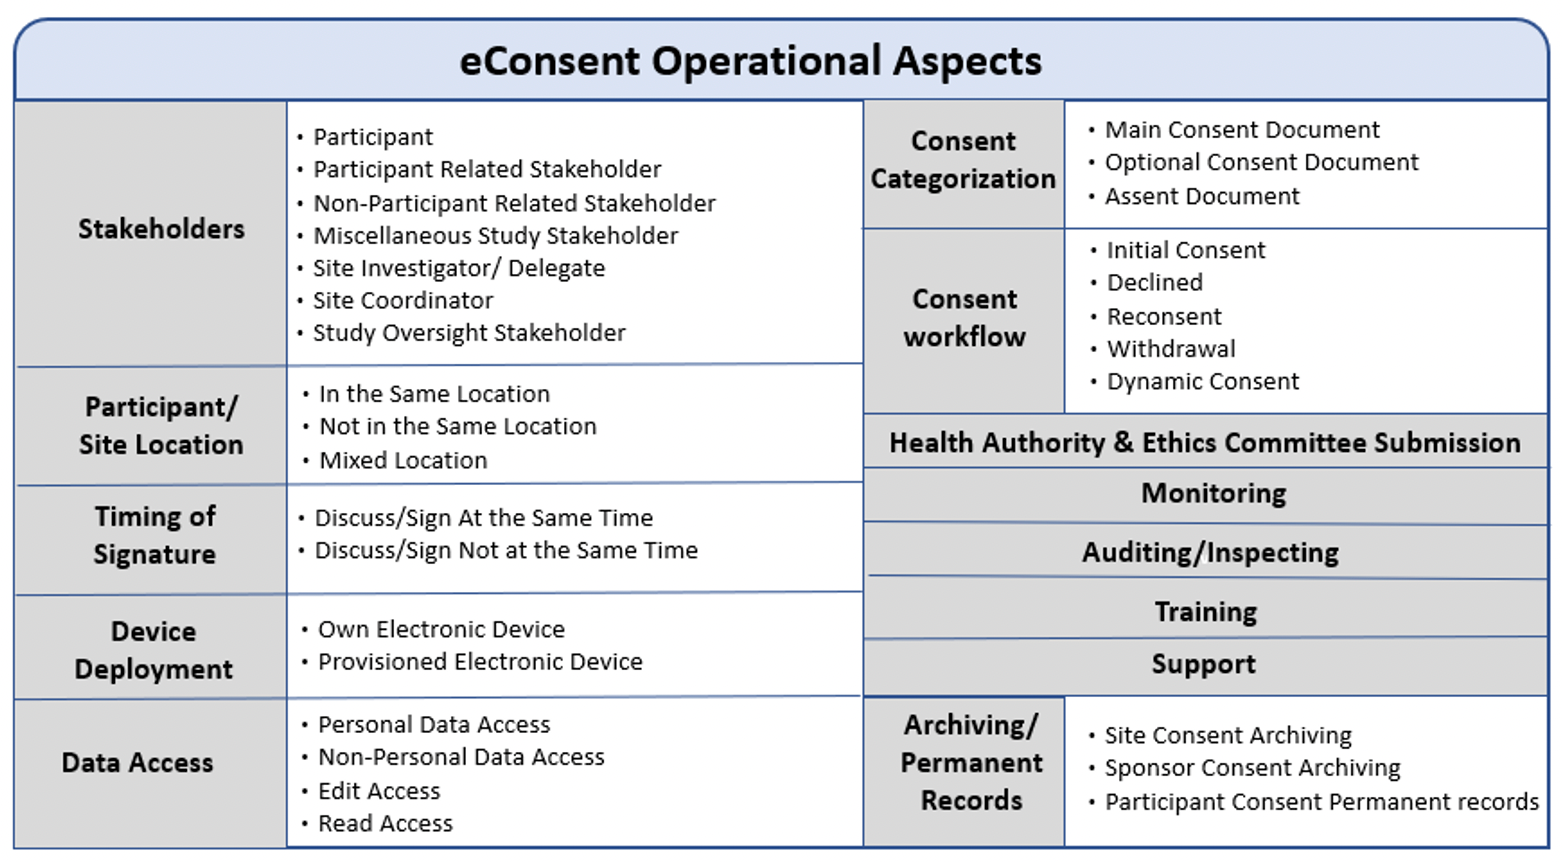 Figure 4. Key Operational Aspects of eConsent.